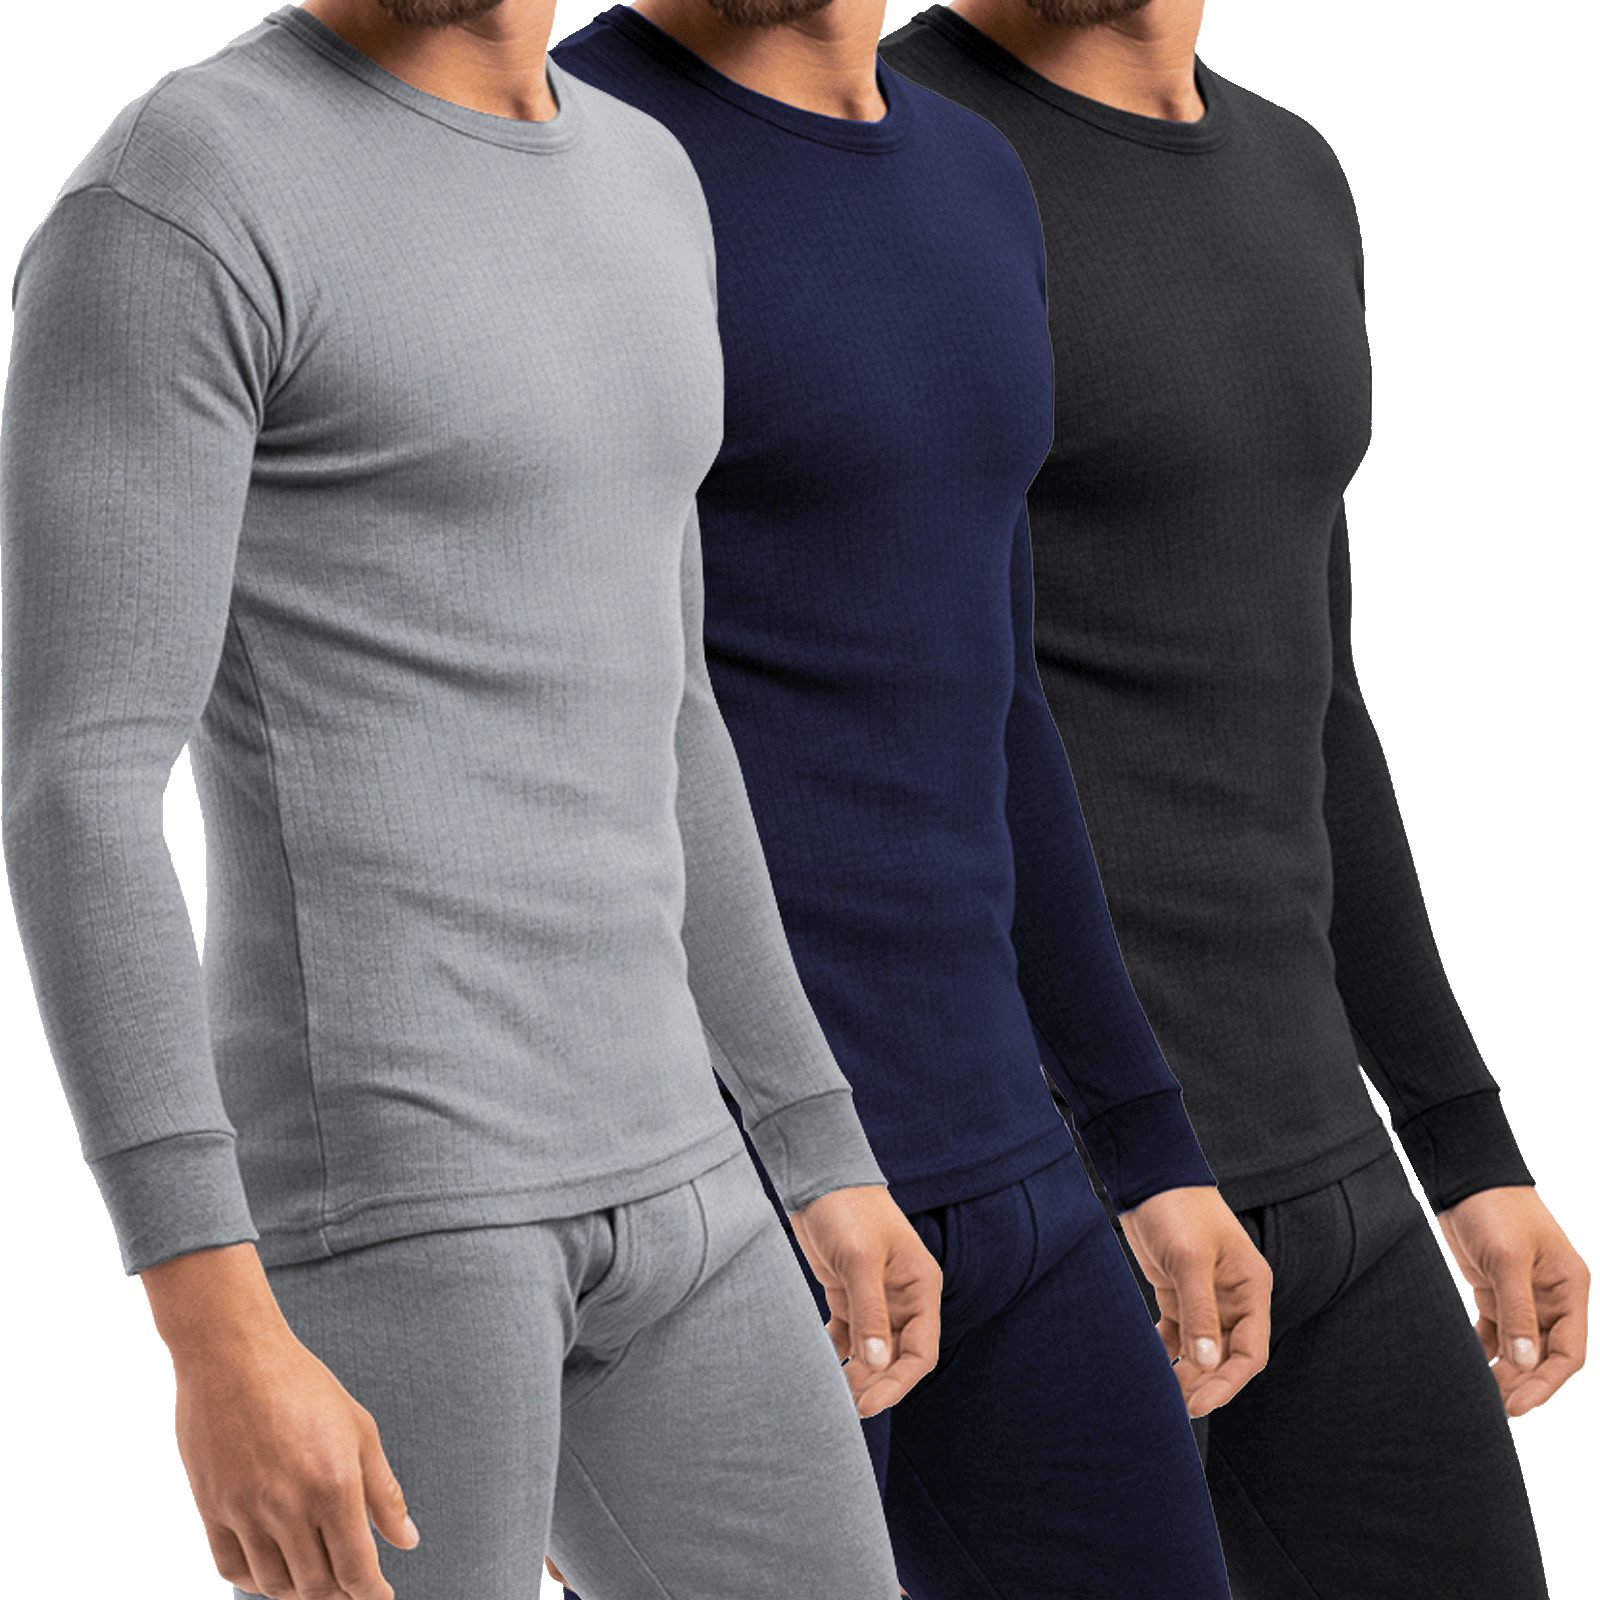 Thermo HEAT Markenwarenshop-Style Größe: x Langarm 3 BOOSTER Thermounterhemd Shirt XXL Herrenunterhemd